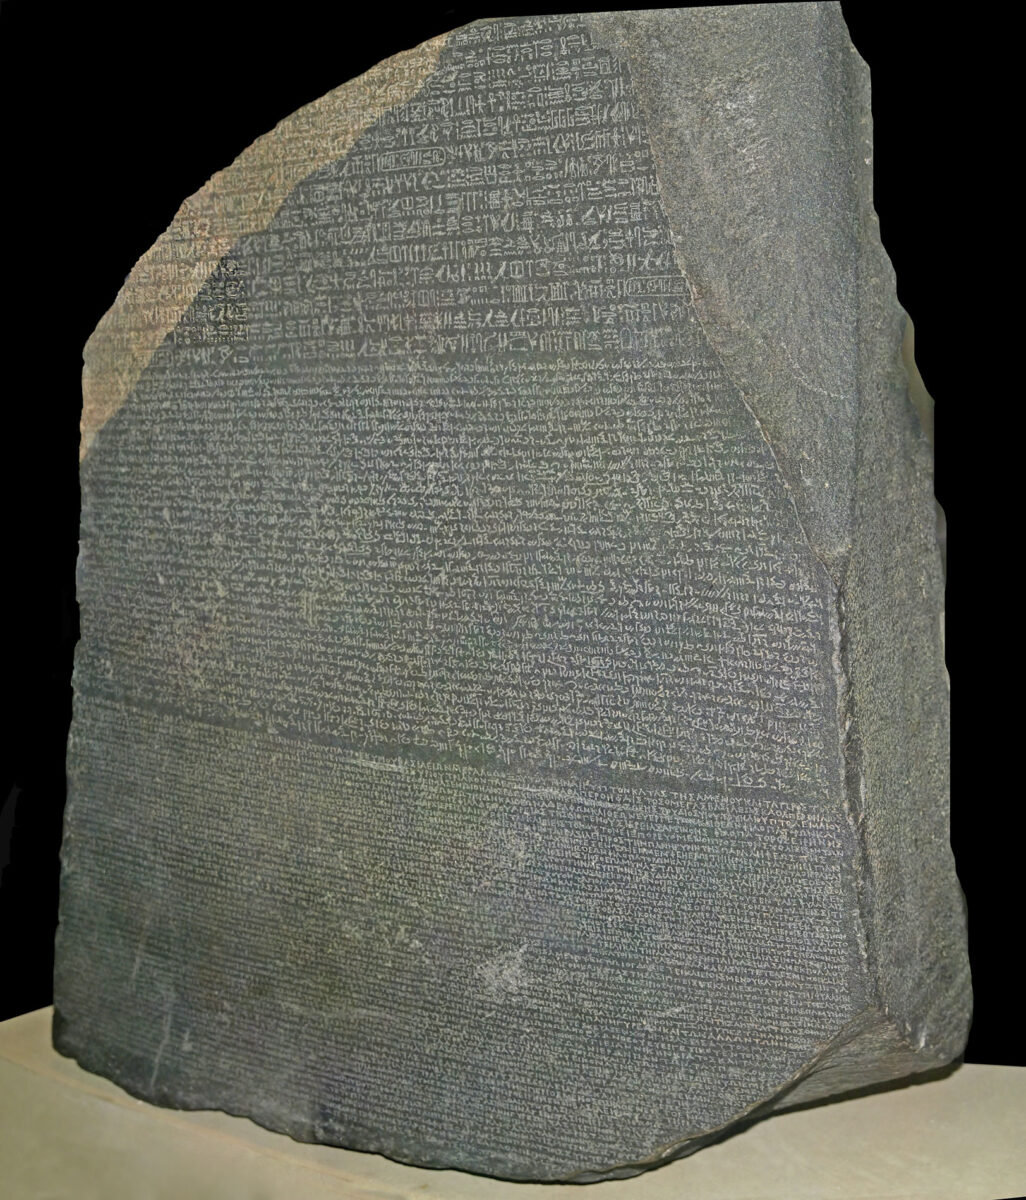 The Rosetta Stone (Image source: Wikipedia )  